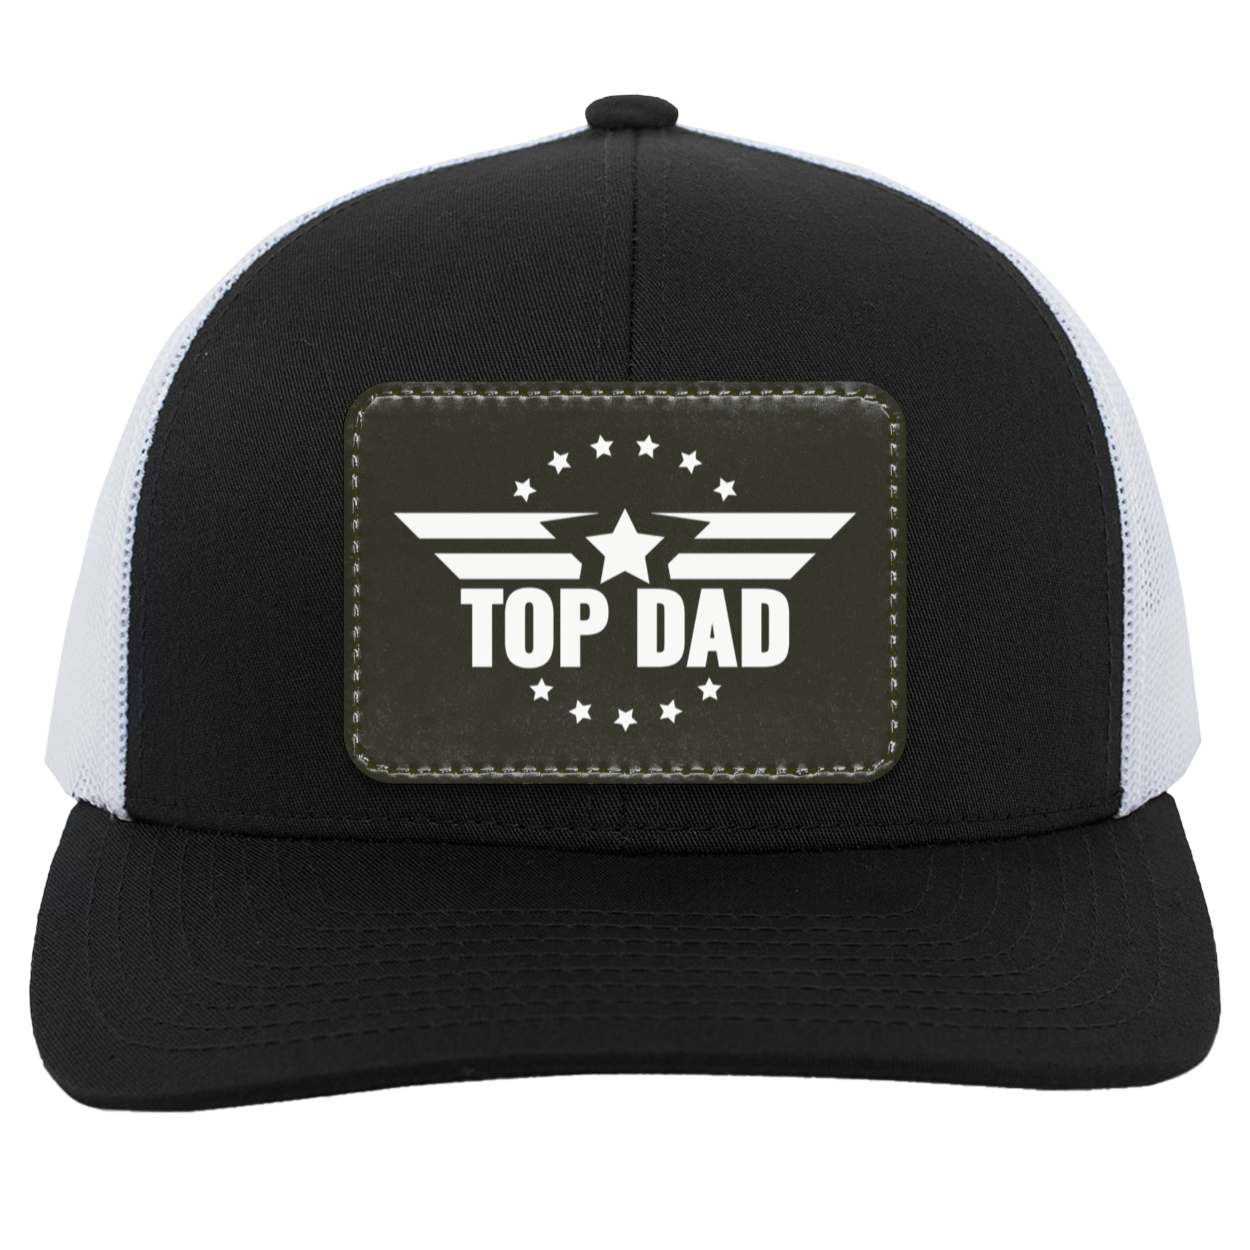 Top Dad Trucker Snap Back